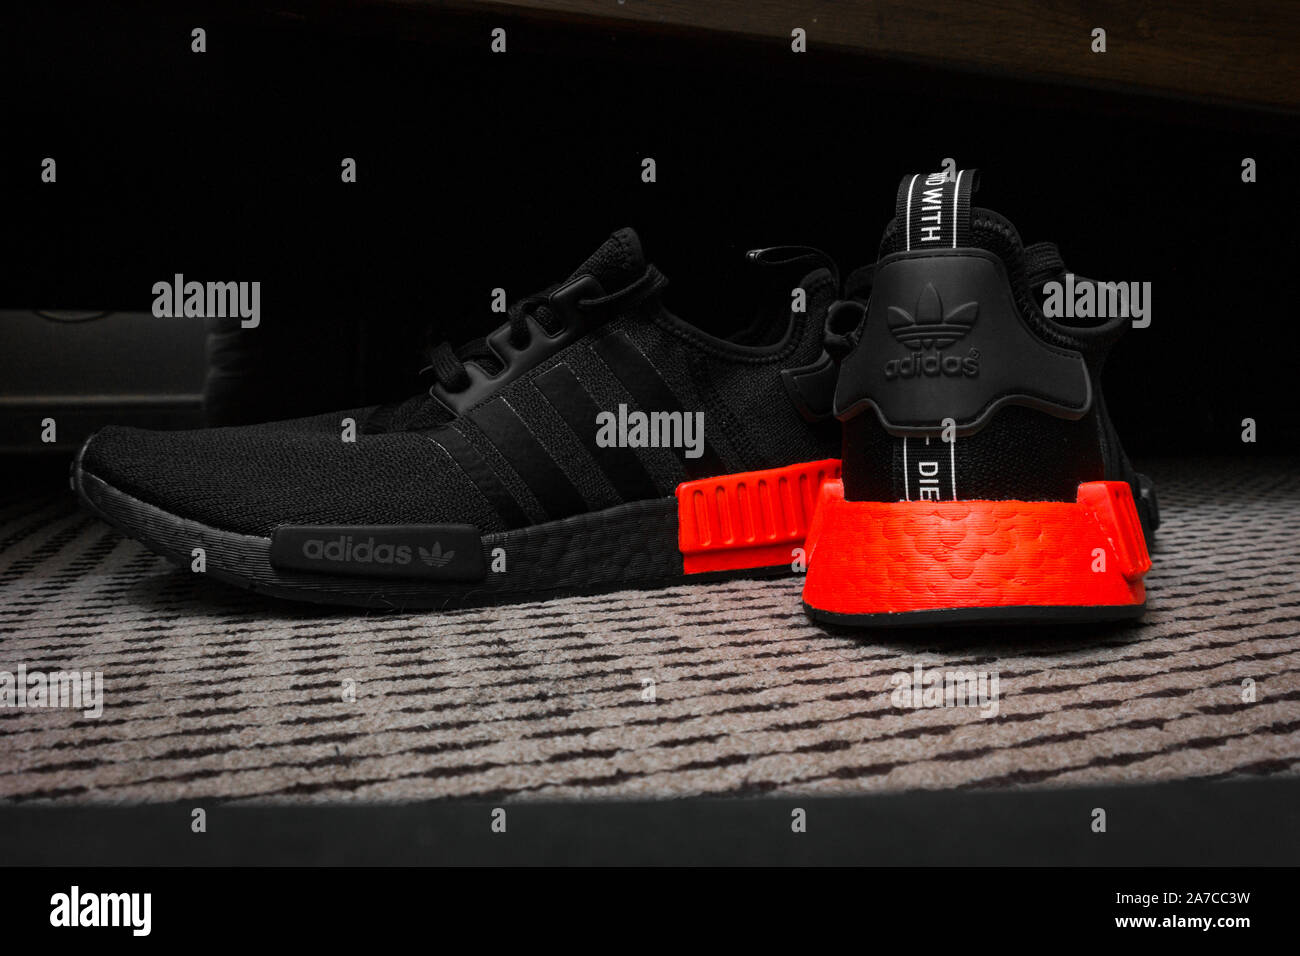 Adidas Nmd Resolution Photography and - Alamy